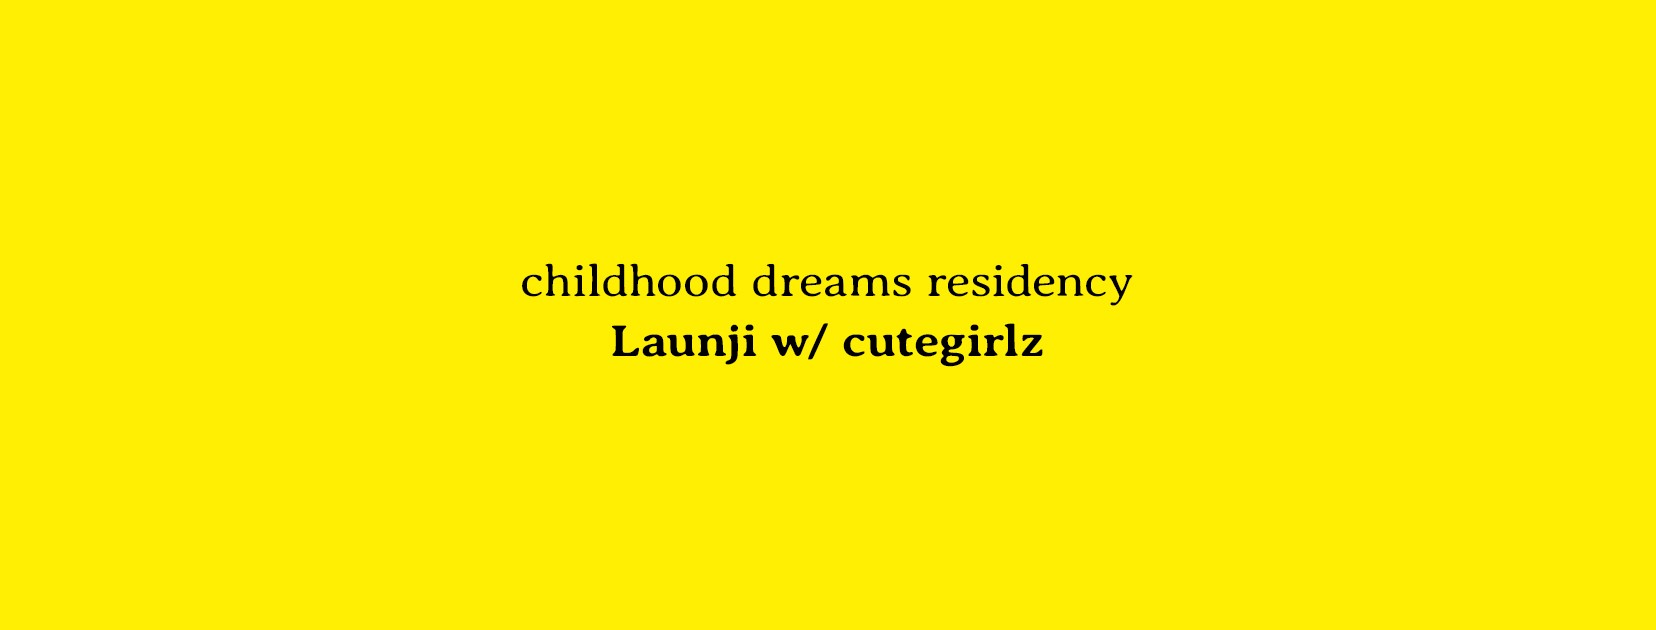 Childhood dreams residency - Launji w/ cutegirlz